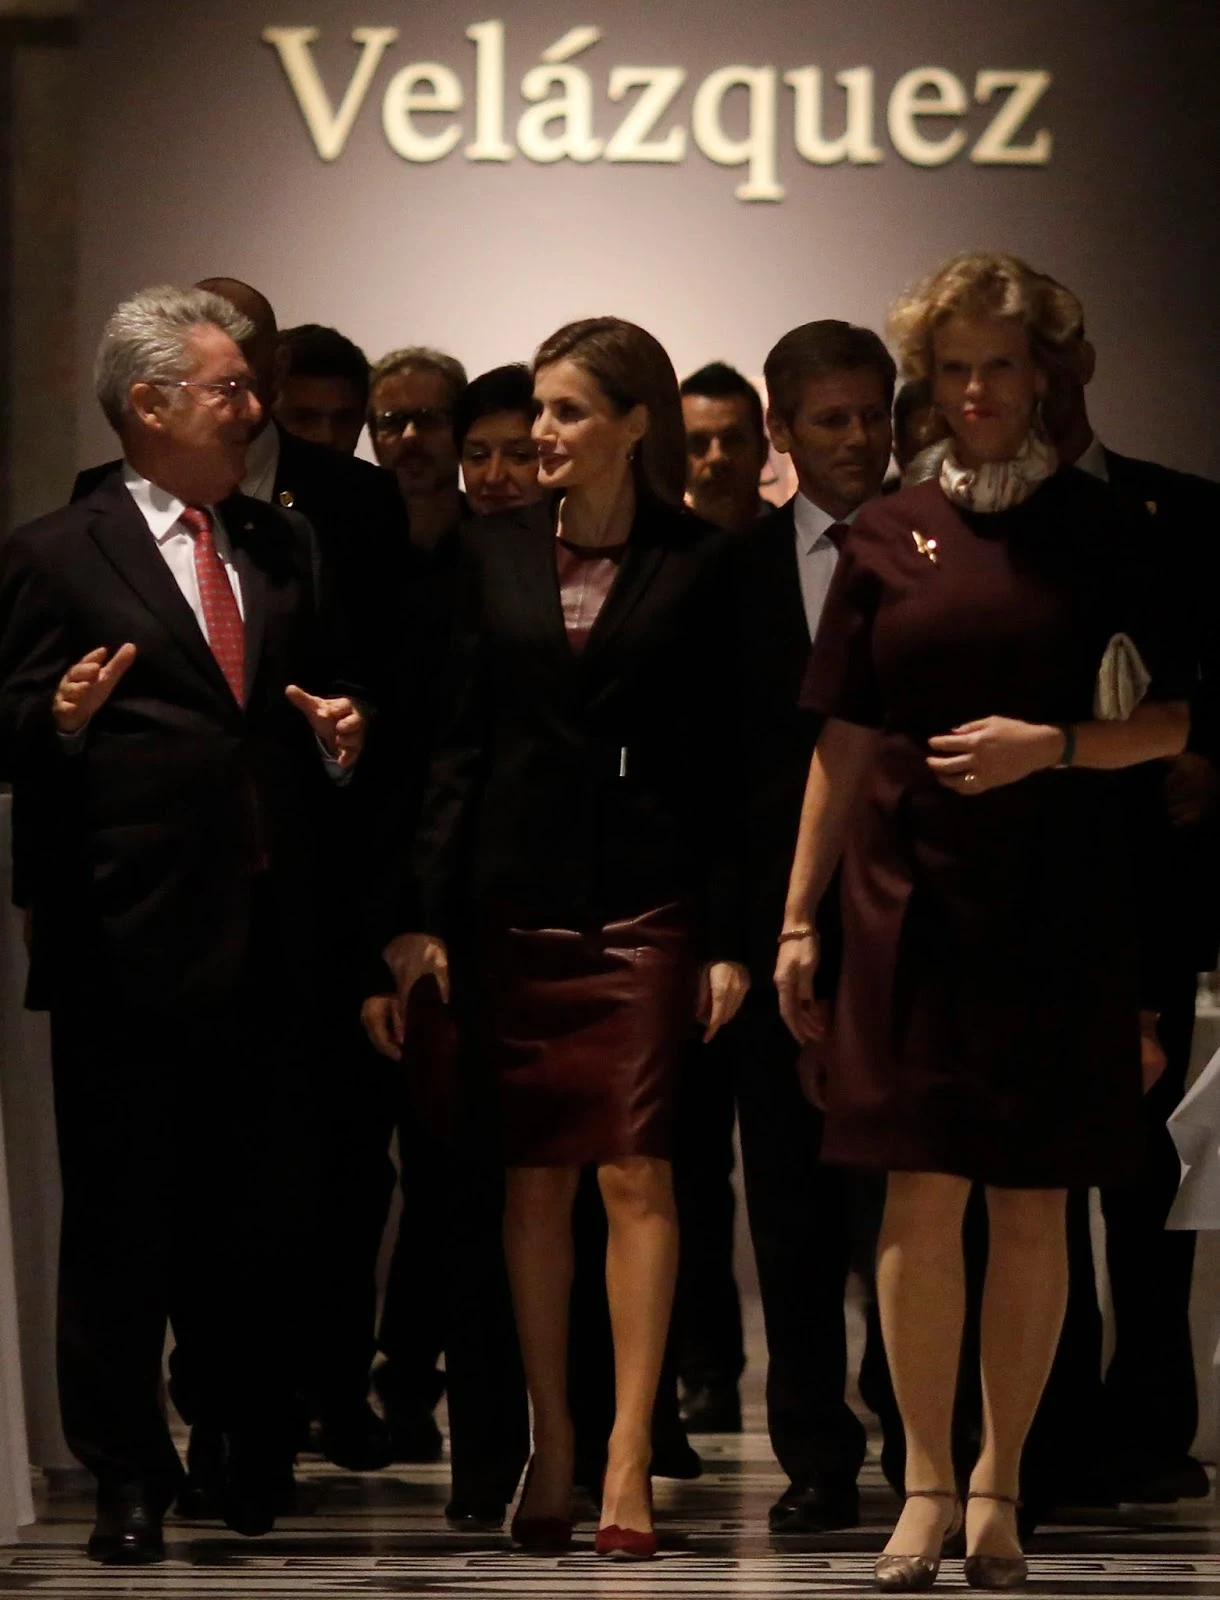 Spanish Queen Letizia open the Velázquez exhibition